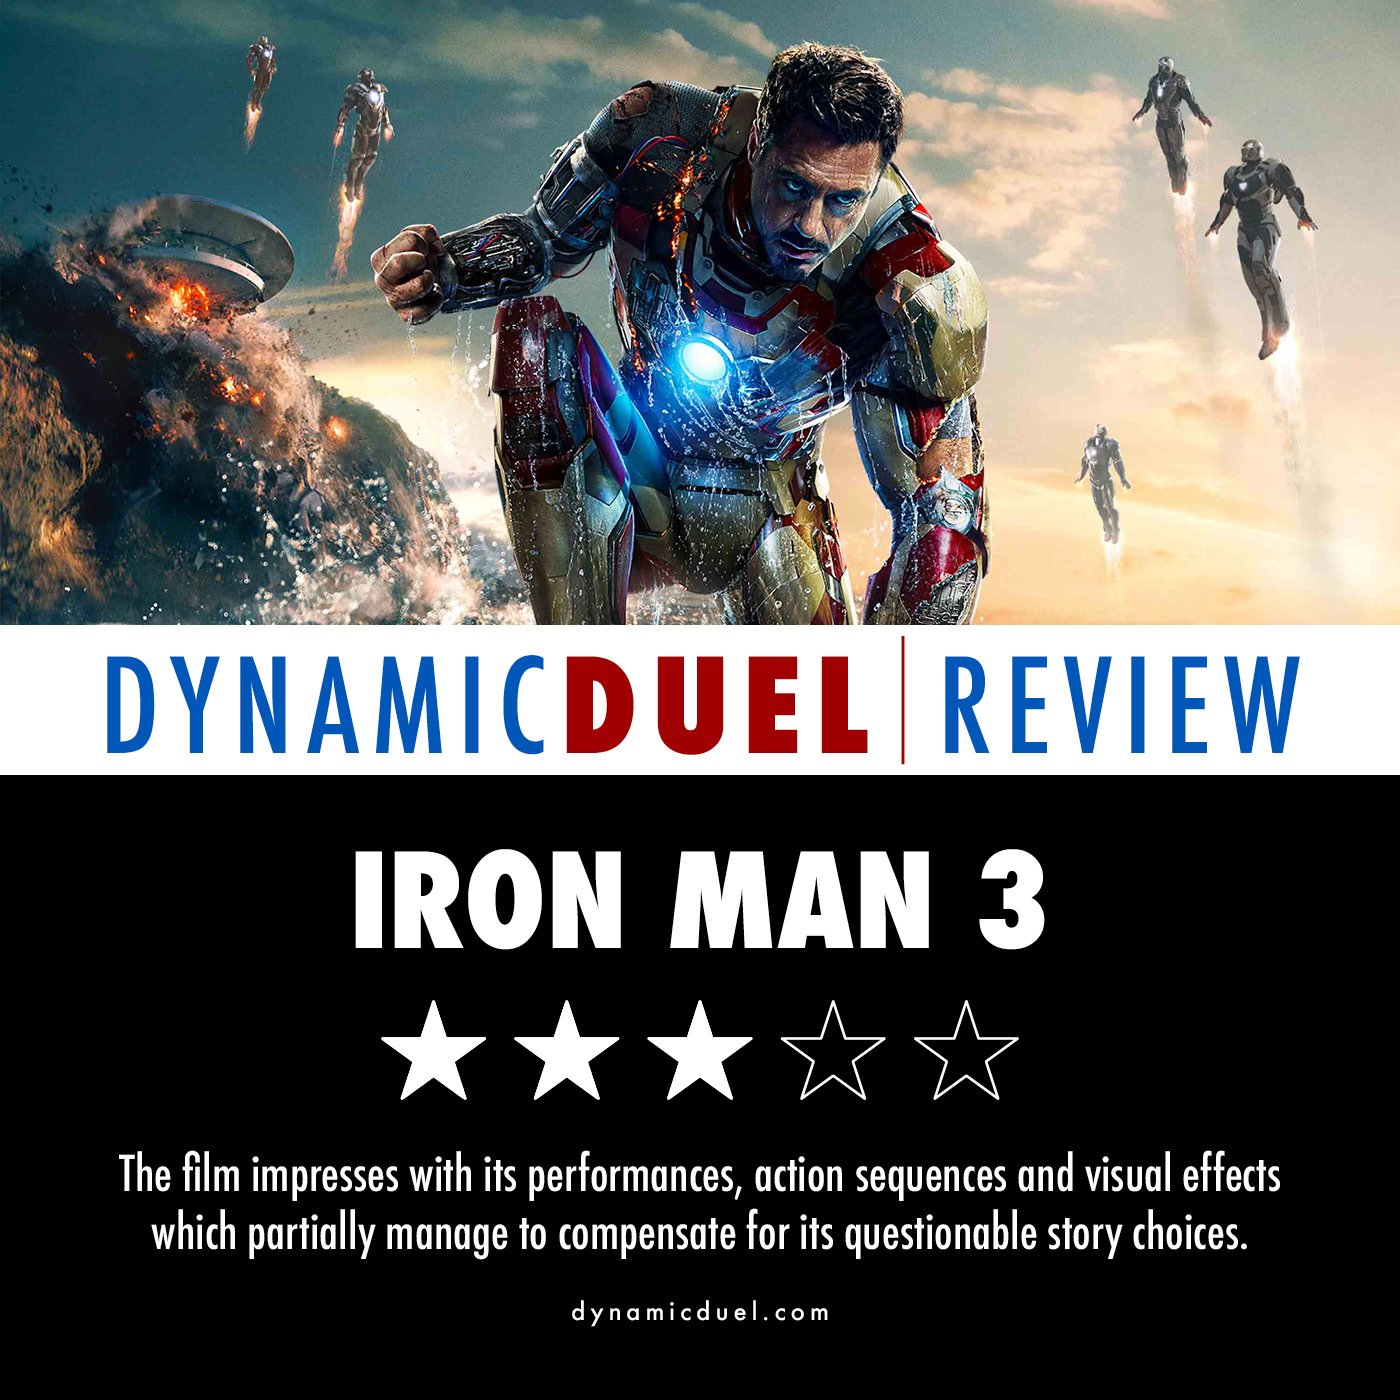 Iron Man 3 Review Image